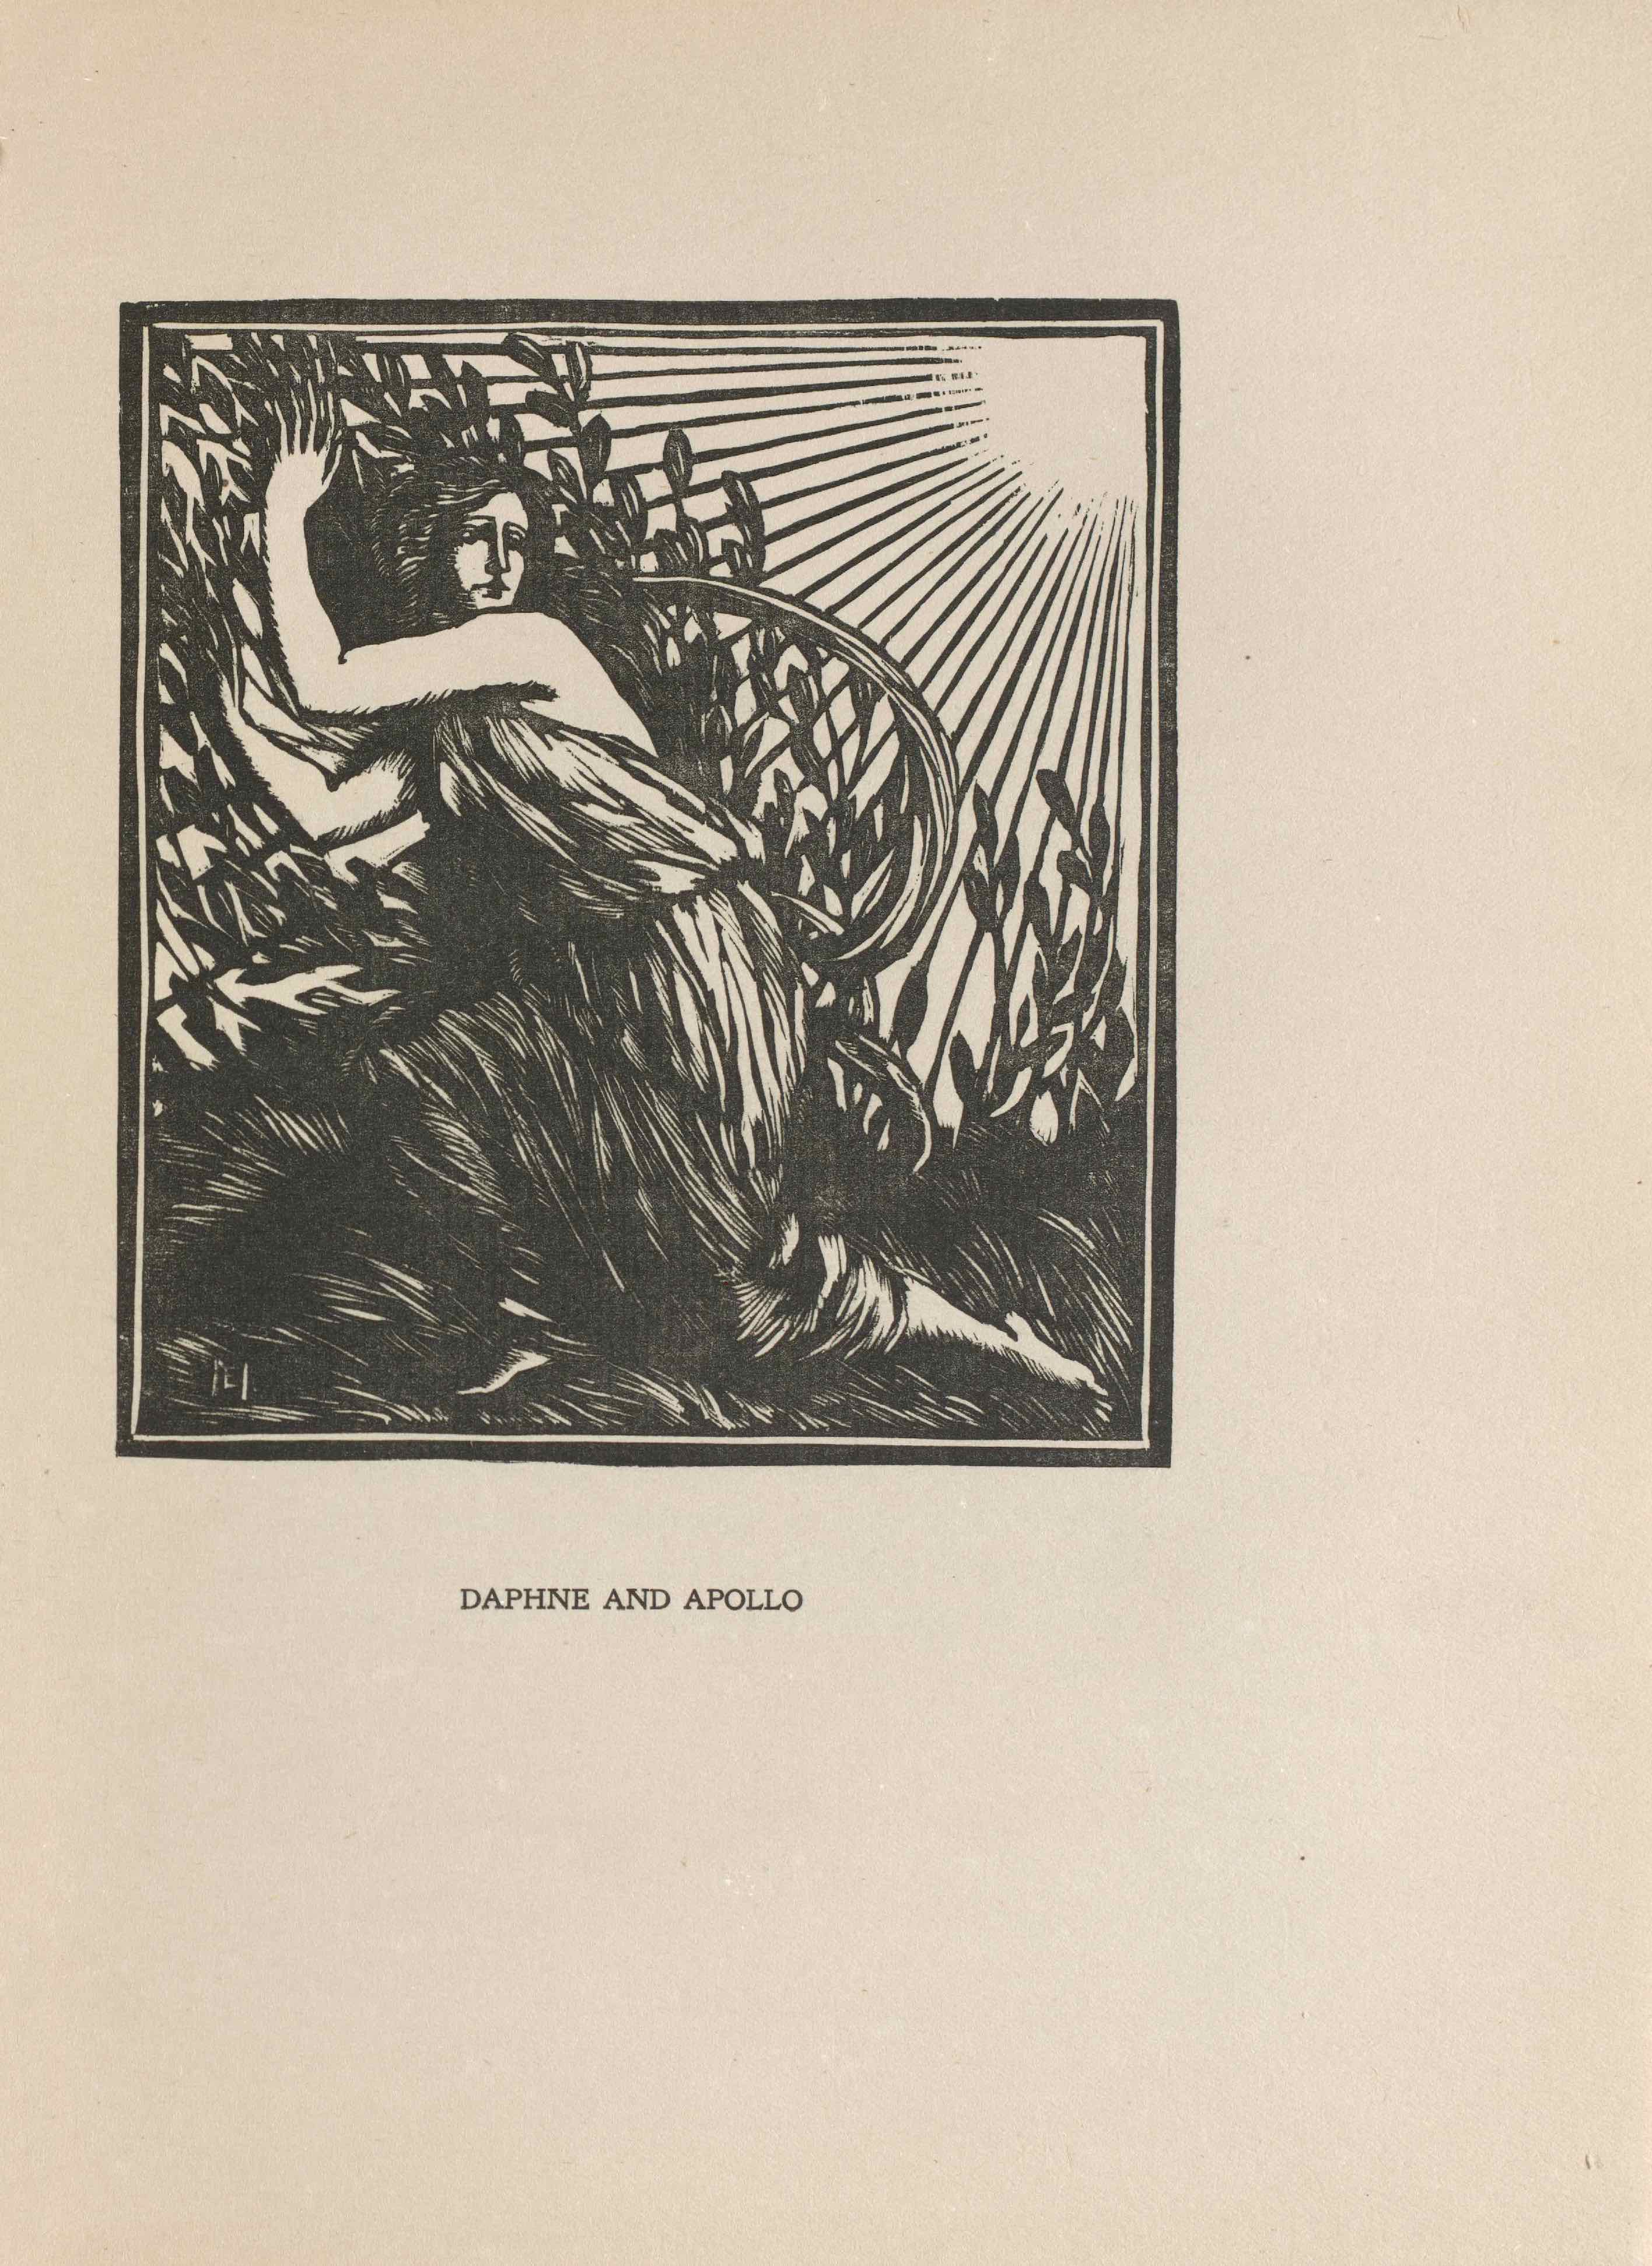 Figure 5. Elinor Monsell, "Daphne and Apollo," The Venture, vol. 1,                        1903, p. 159.